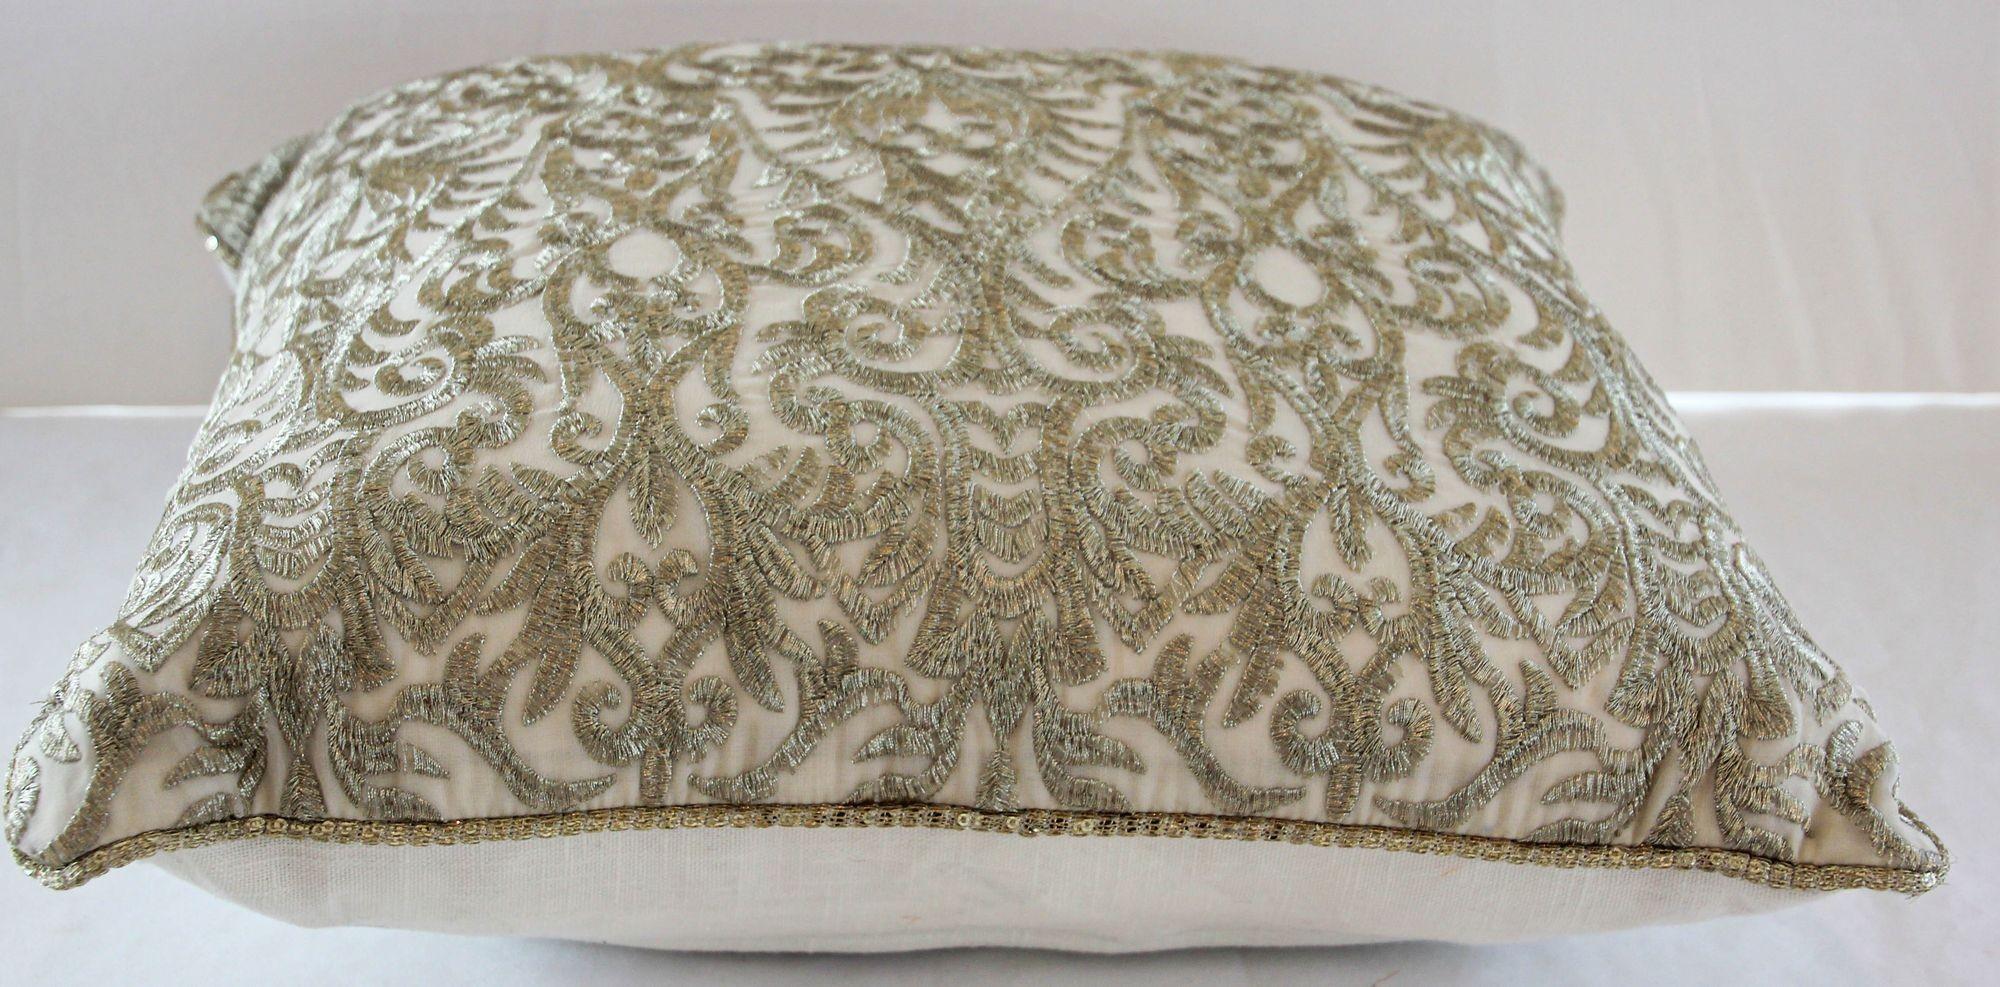 Turkish Moorish Ottoman Style Throw Pillow with Silver Metallic Embroidery For Sale 4